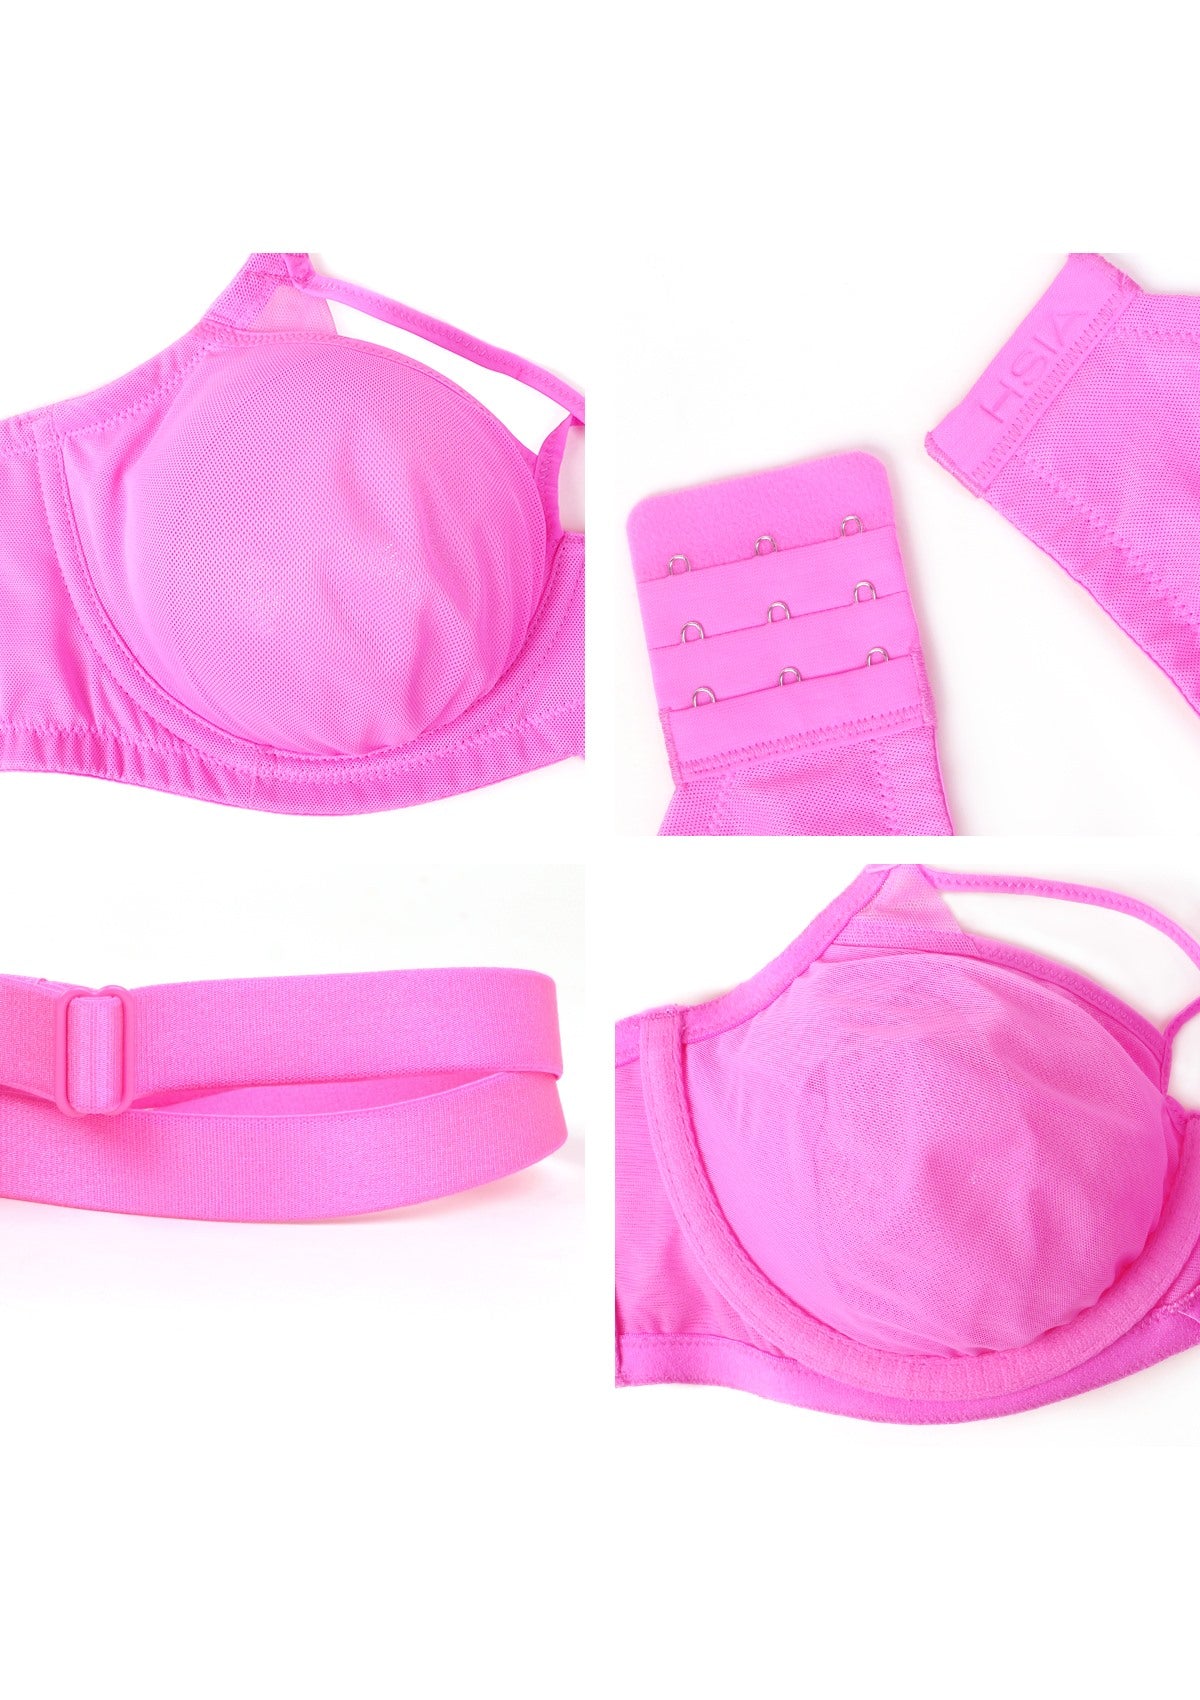 HSIA Billie Cross Front Strap Smooth Sheer Mesh Comfy Underwire Bra - Barbie Pink / 40 / C